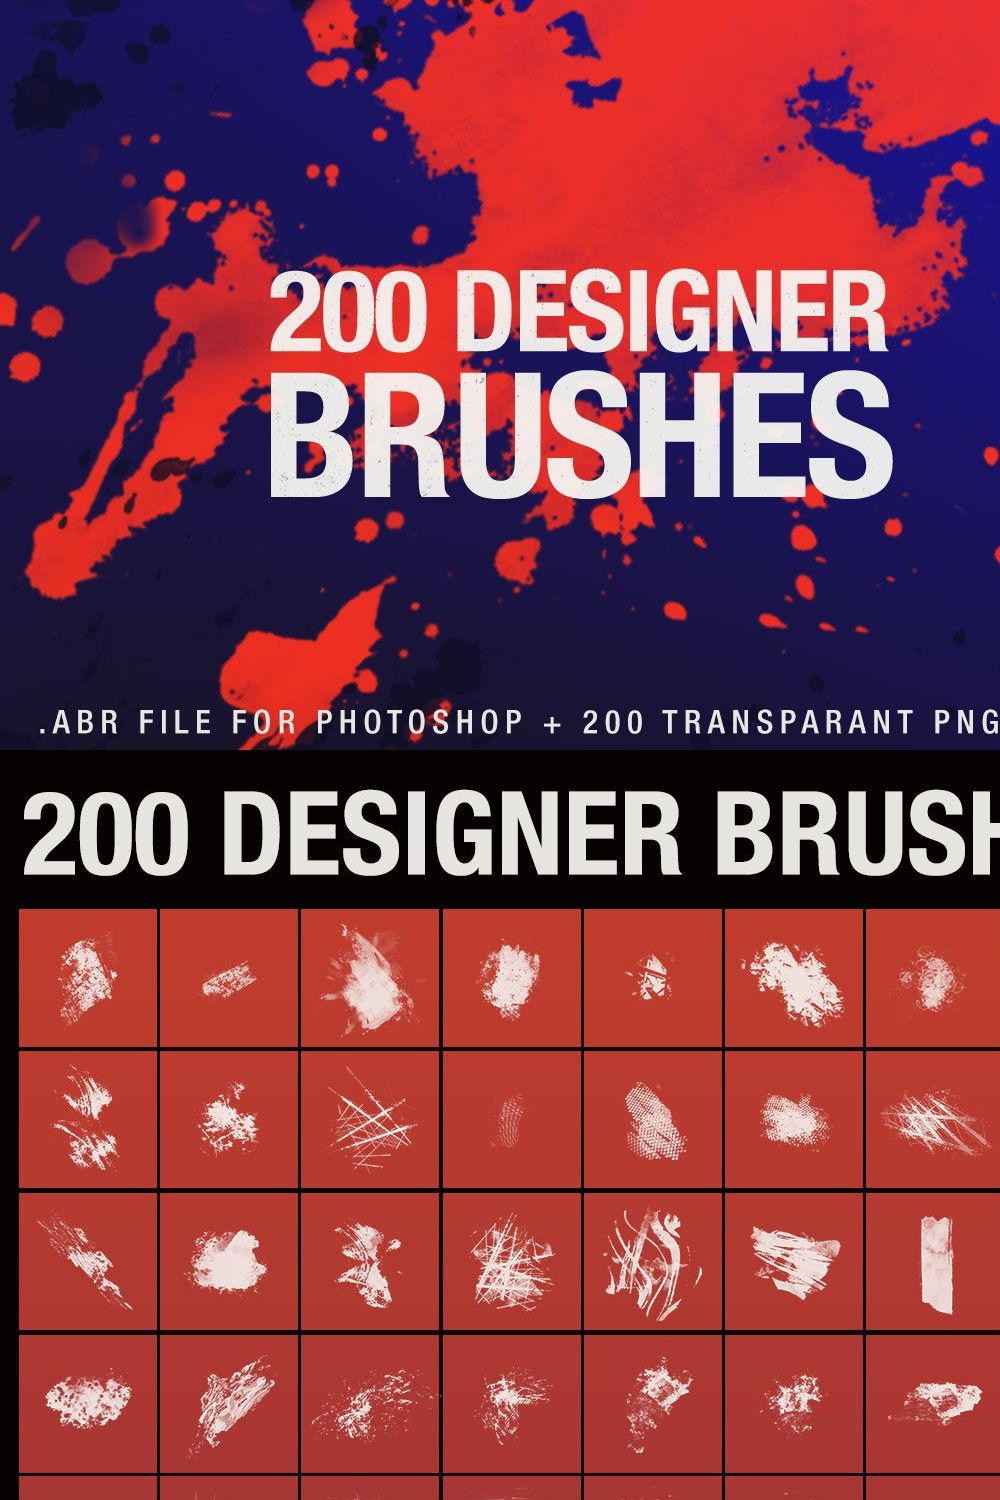 200 Designer Brushes for Photoshop pinterest preview image.